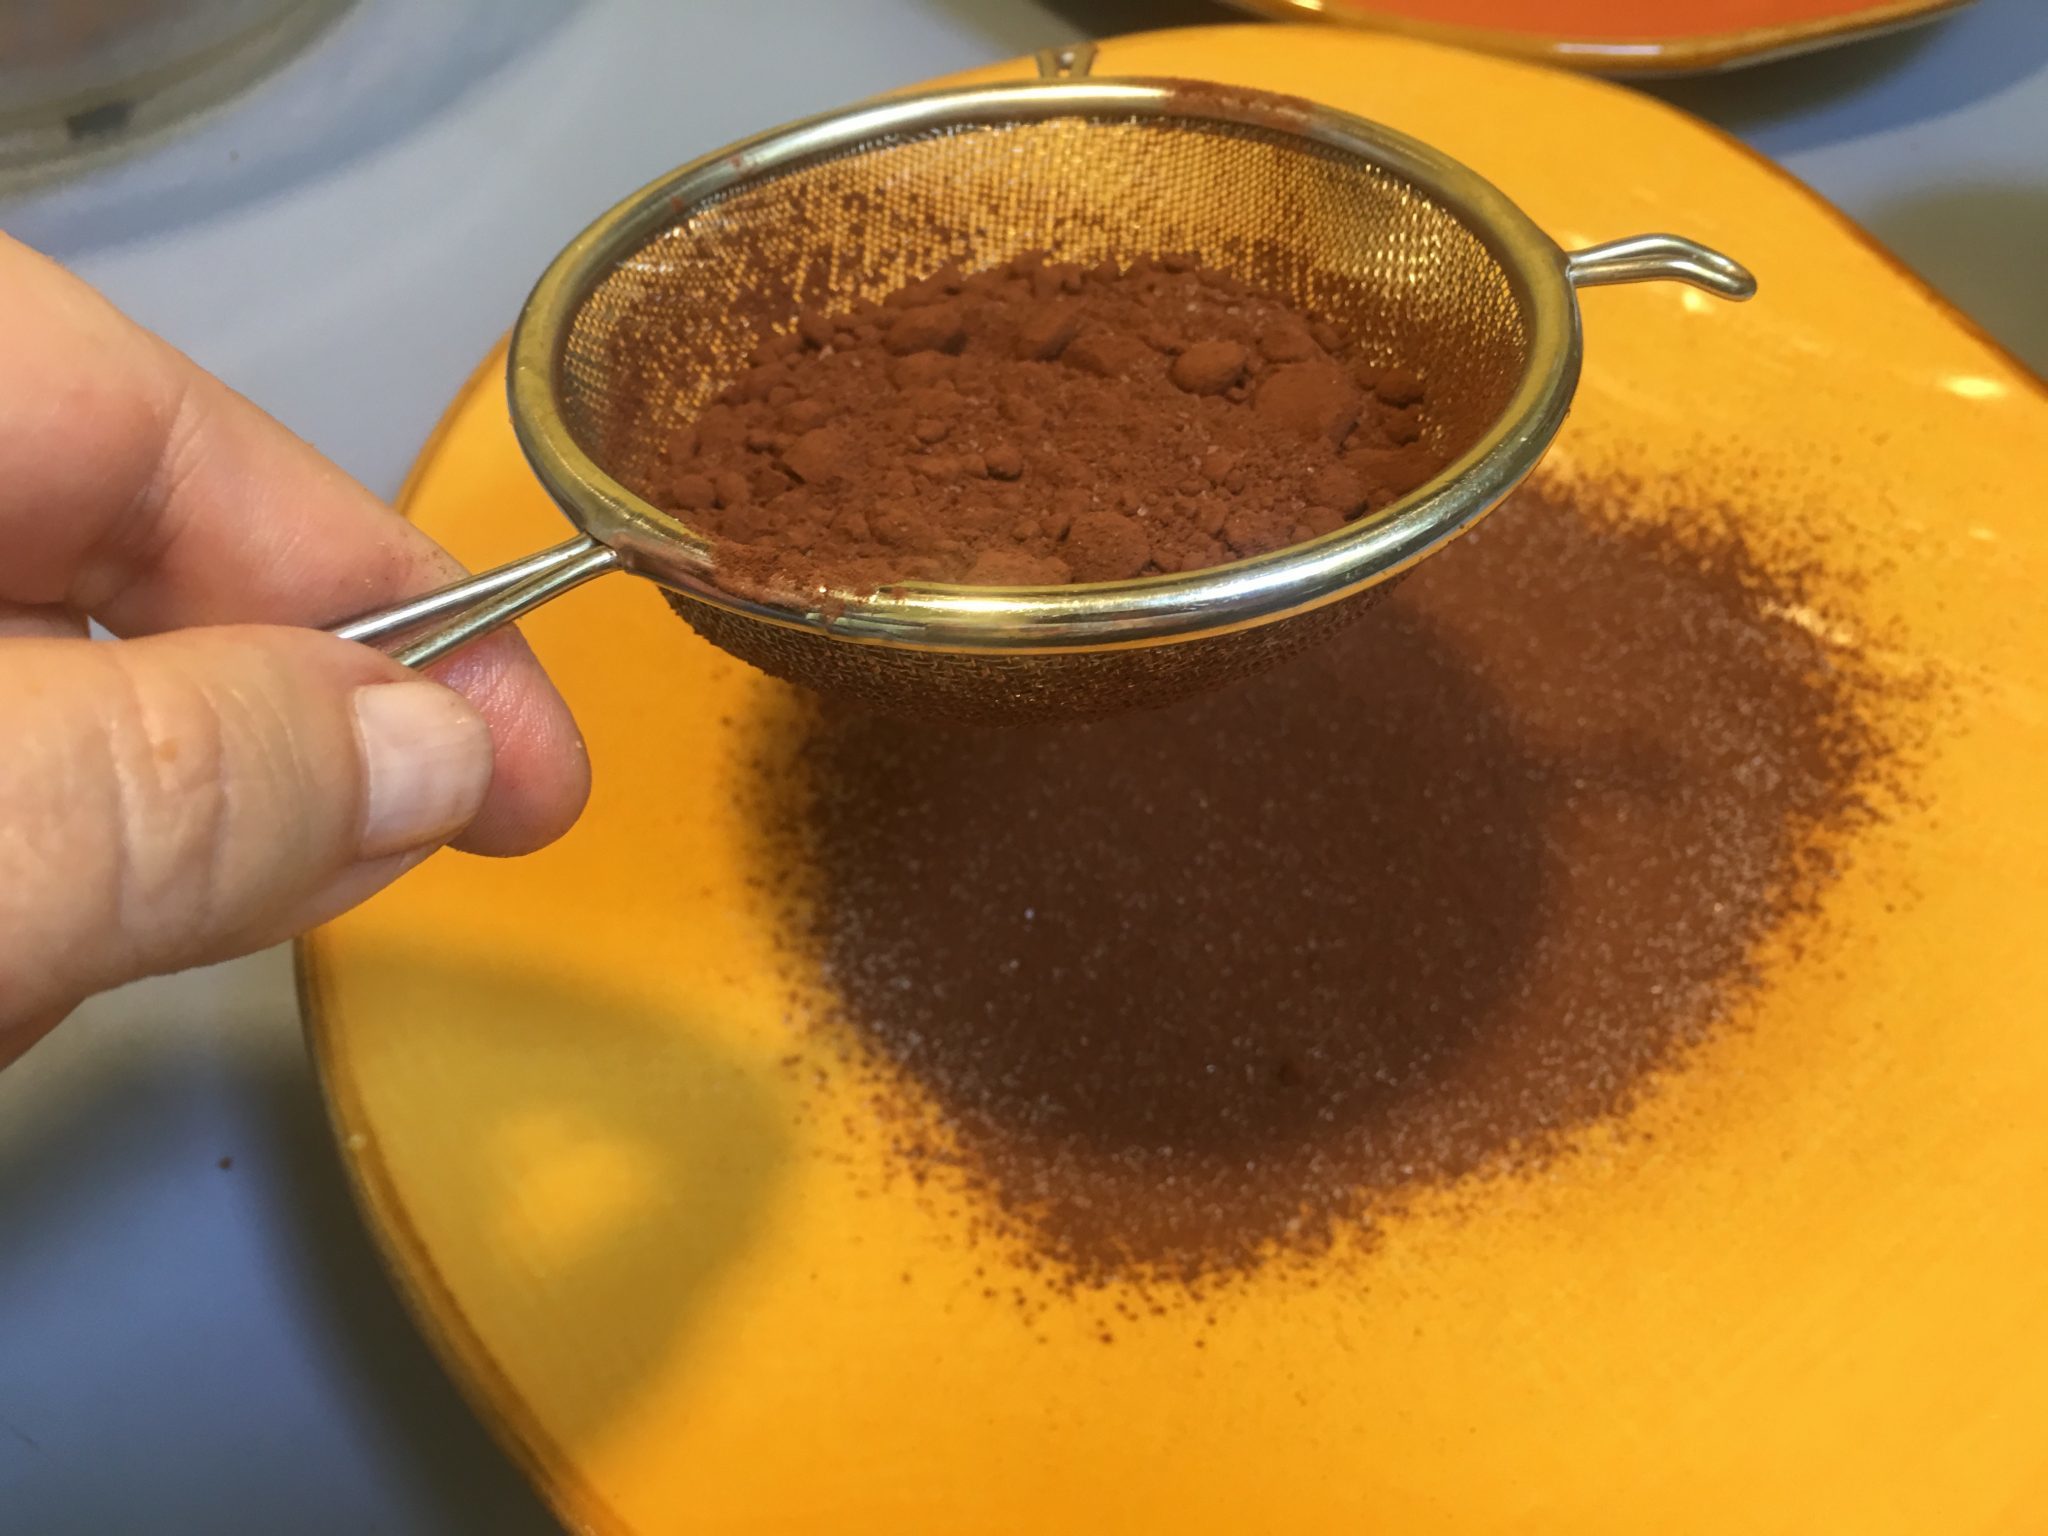 Tartufi al cioccolato - il cacao setacciato